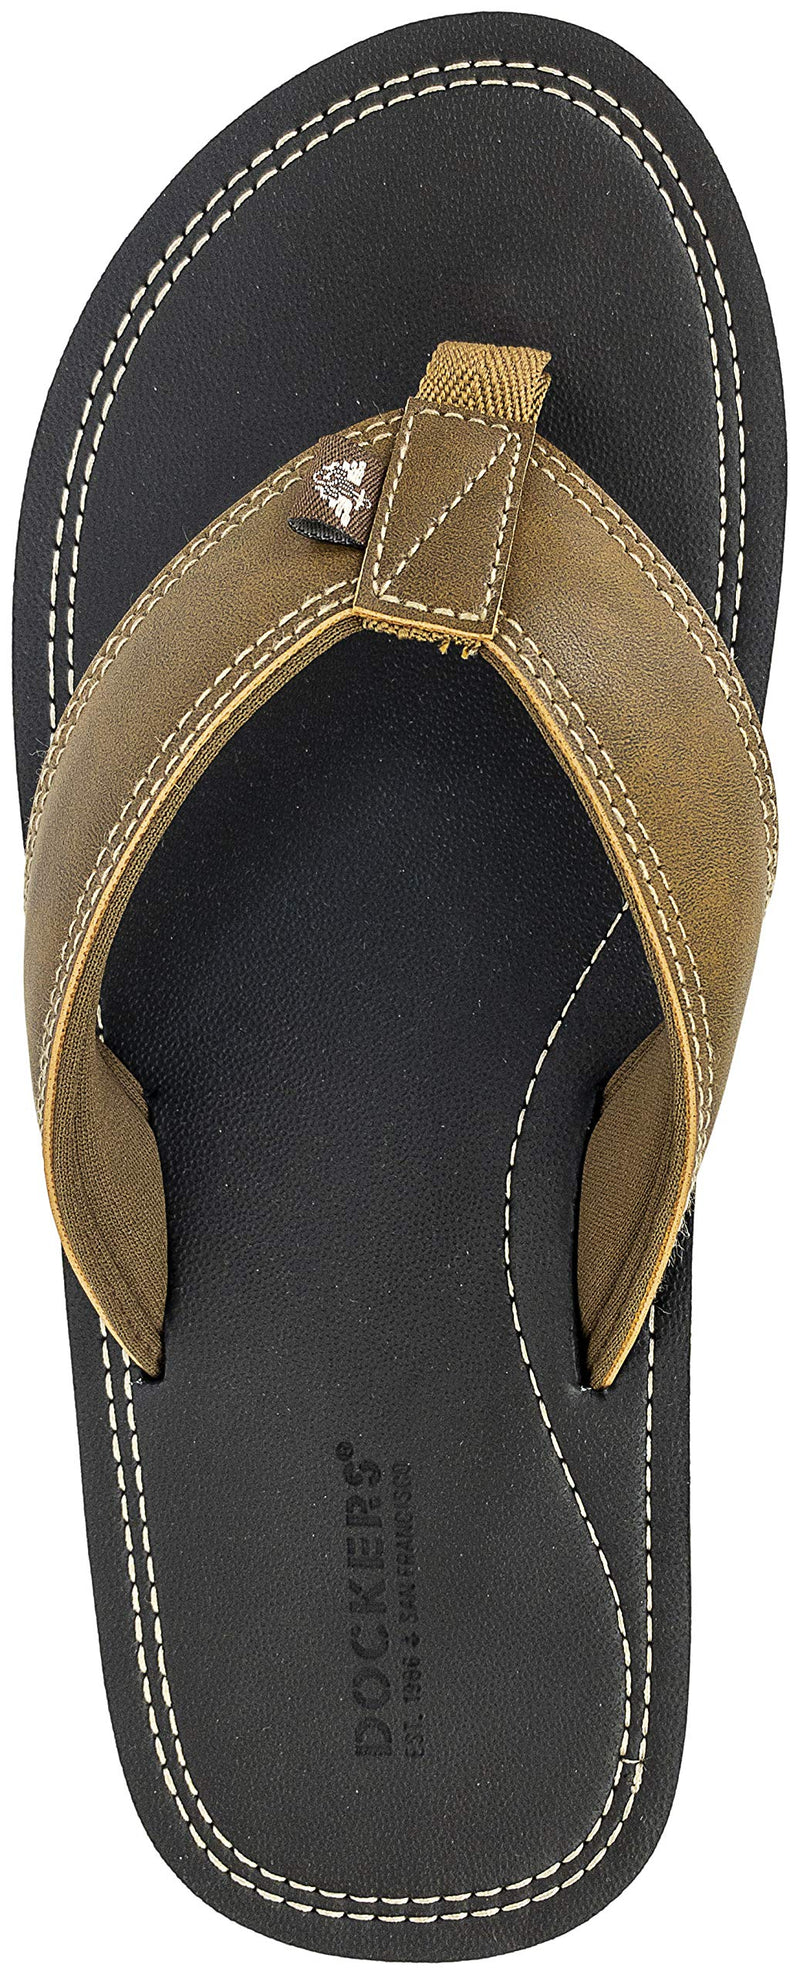 Dockers Men's Flip Flop Sandal ; Classic Comfort Footbed with Two-Tone Upper,  (Black Pebble)